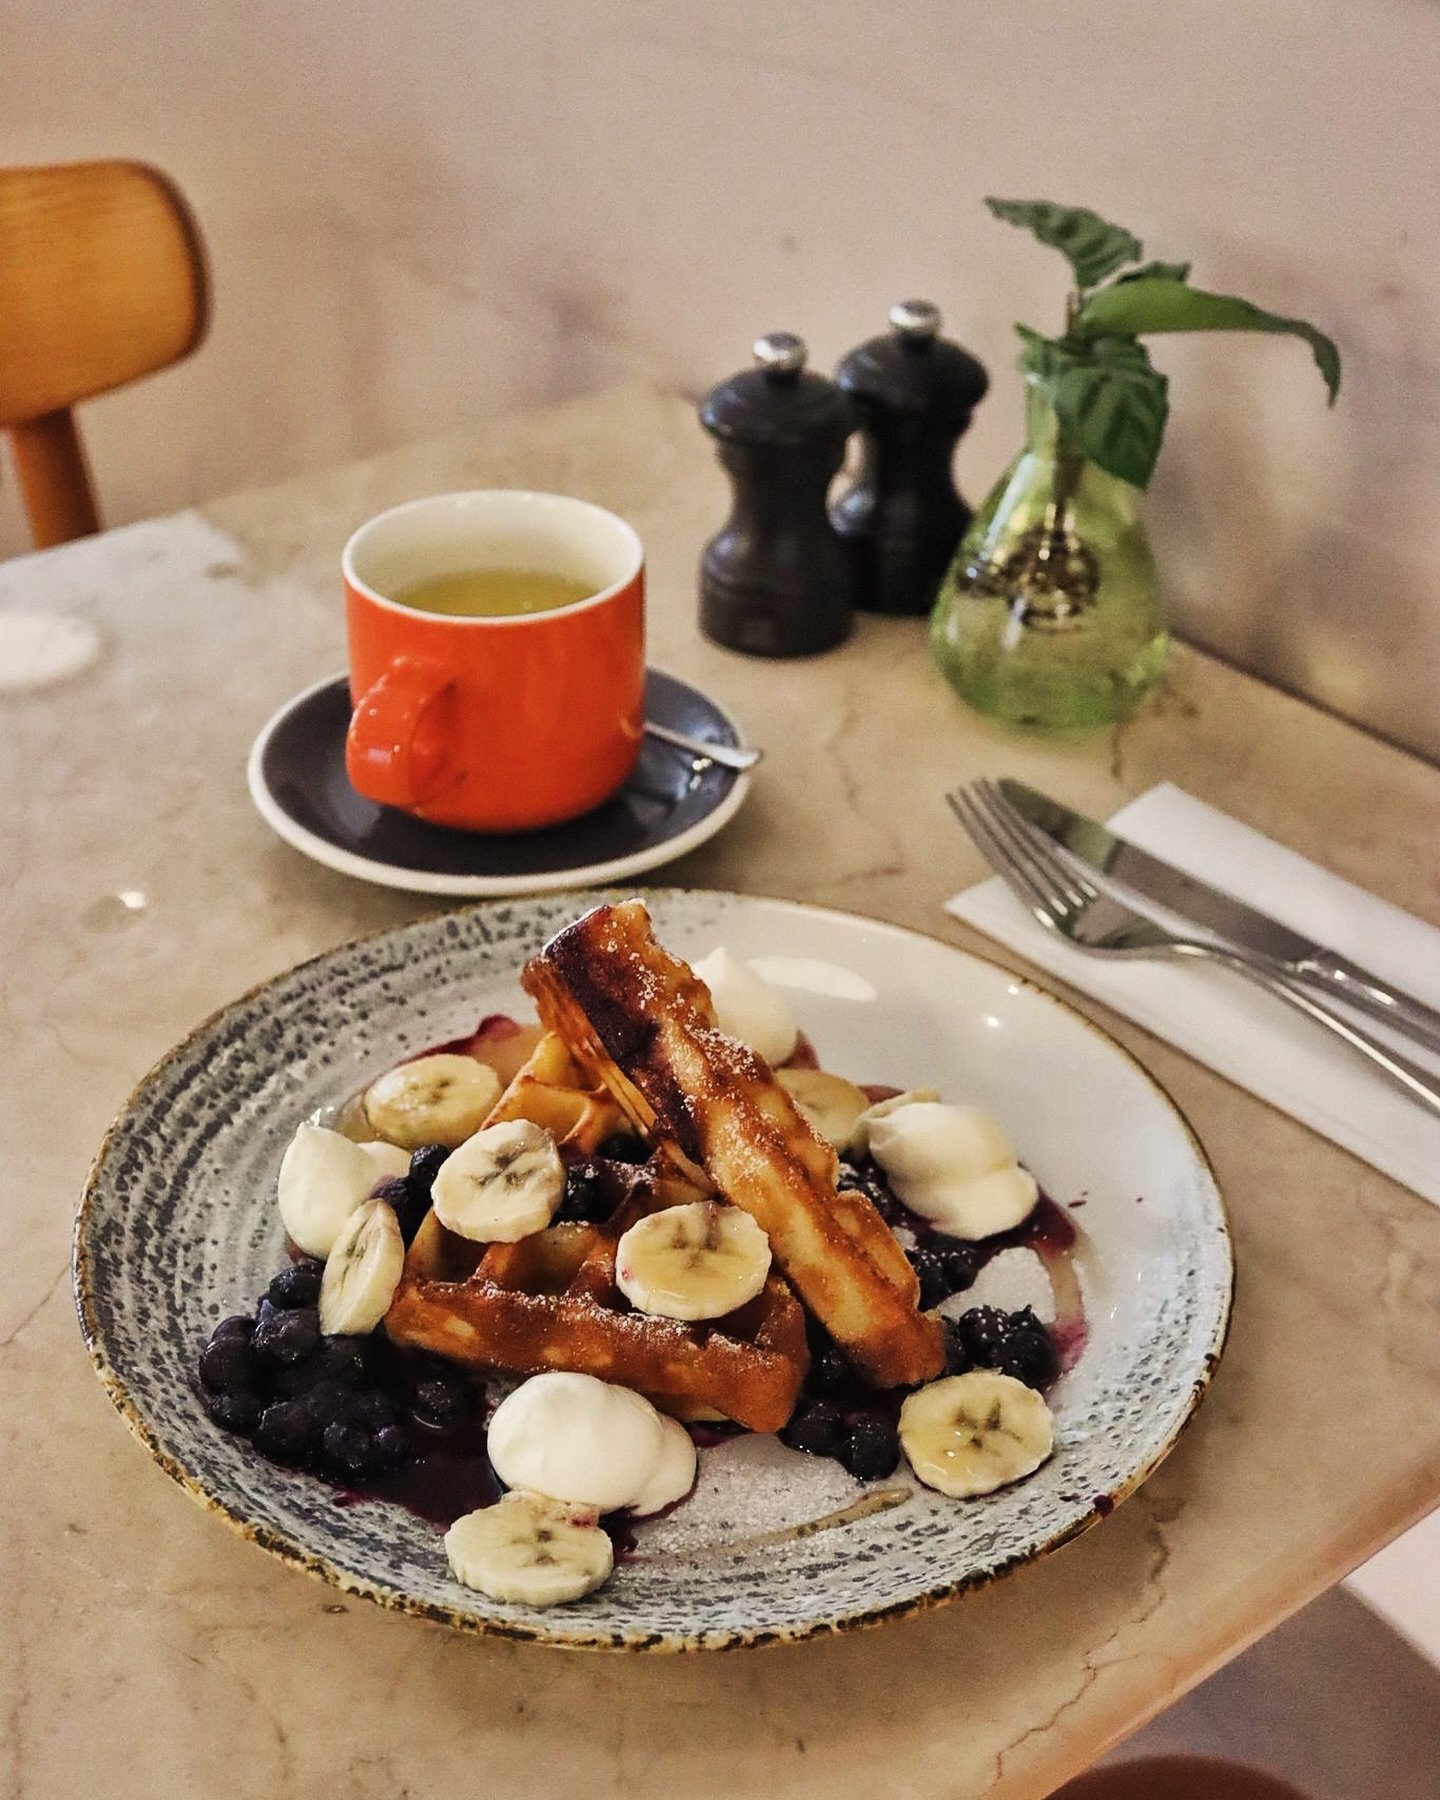 Every day should start with waffles 🧇 An additional green tea for a nutrition boost 😉
.
.
.
.
#EnglandsGrace #breakfast #waffles #breakfasttime #londonrestaurants #londonfoodie #stjohnswood